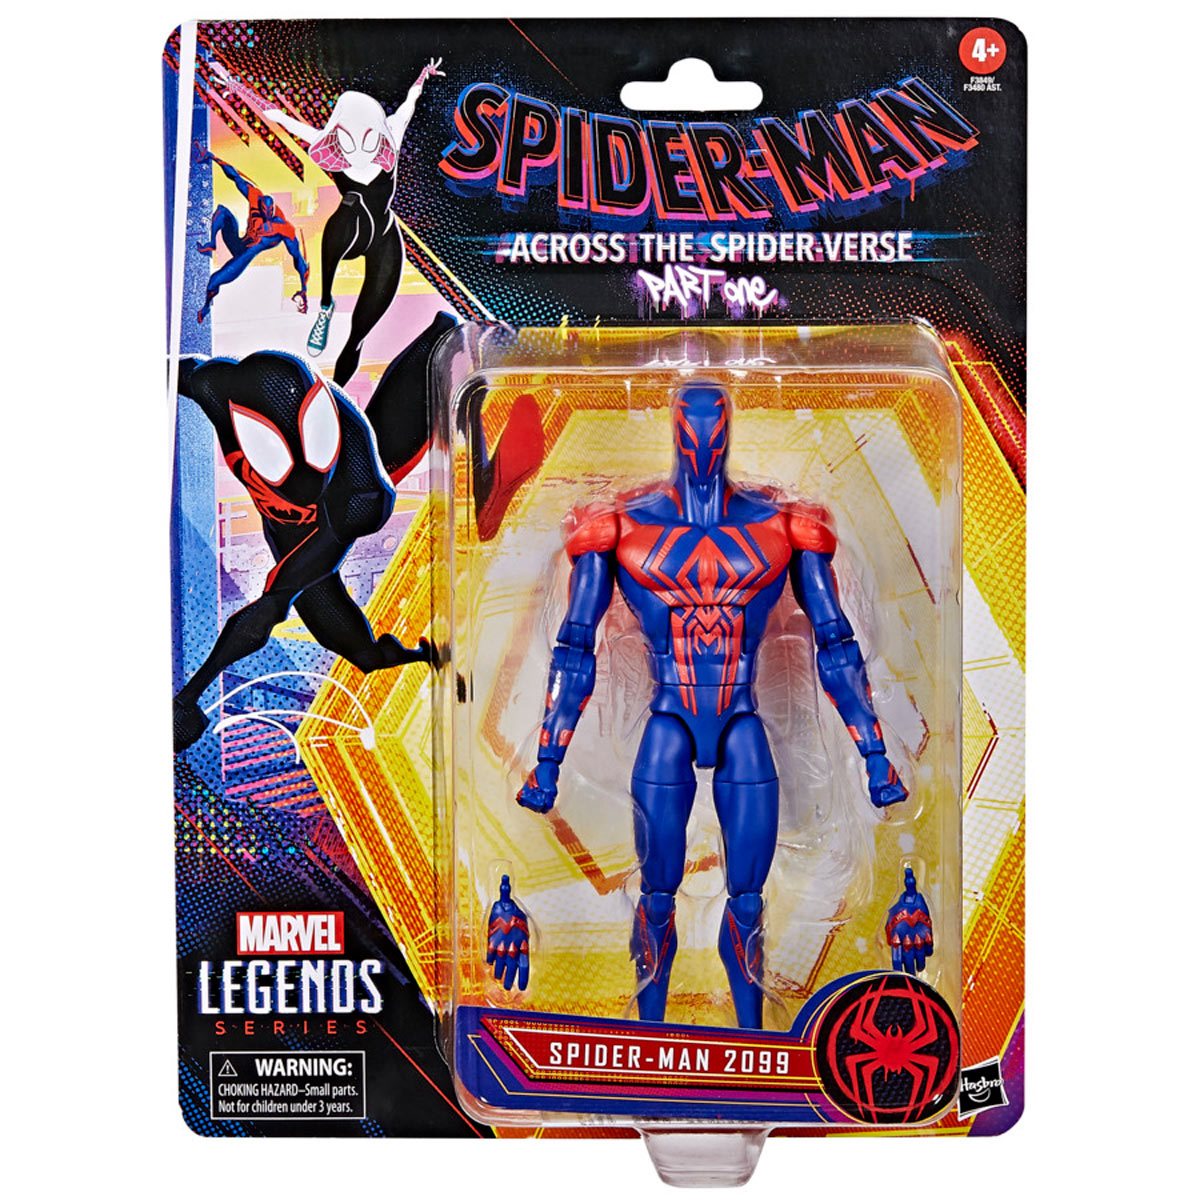 Specials Marvel Legends Silver Surfer Spider-Man Captain America 6